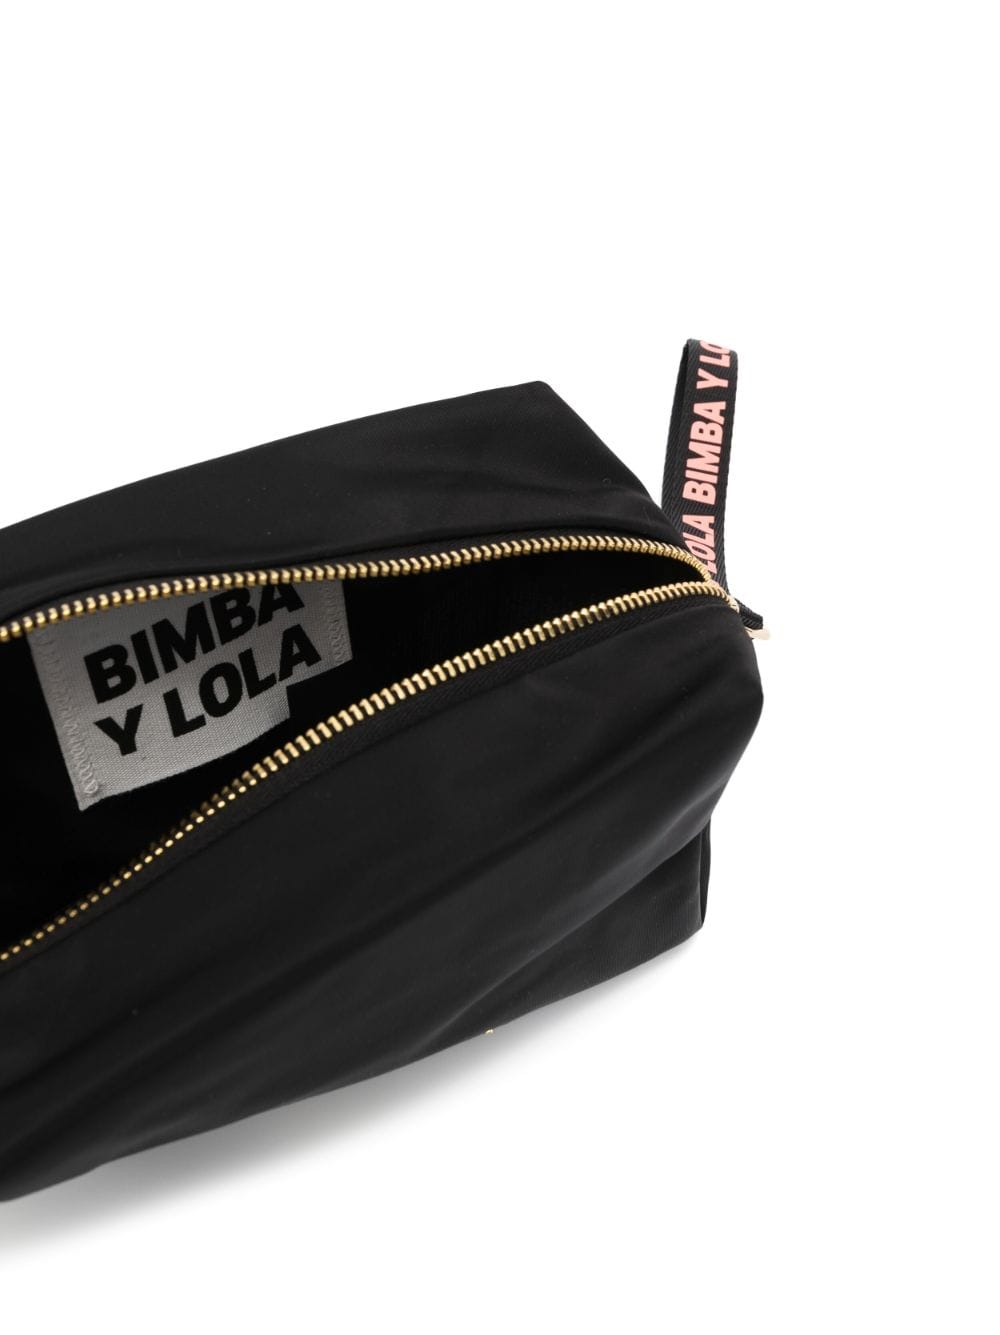 Bimba y Lola logo-print Partitioned Makeup Bag - Farfetch